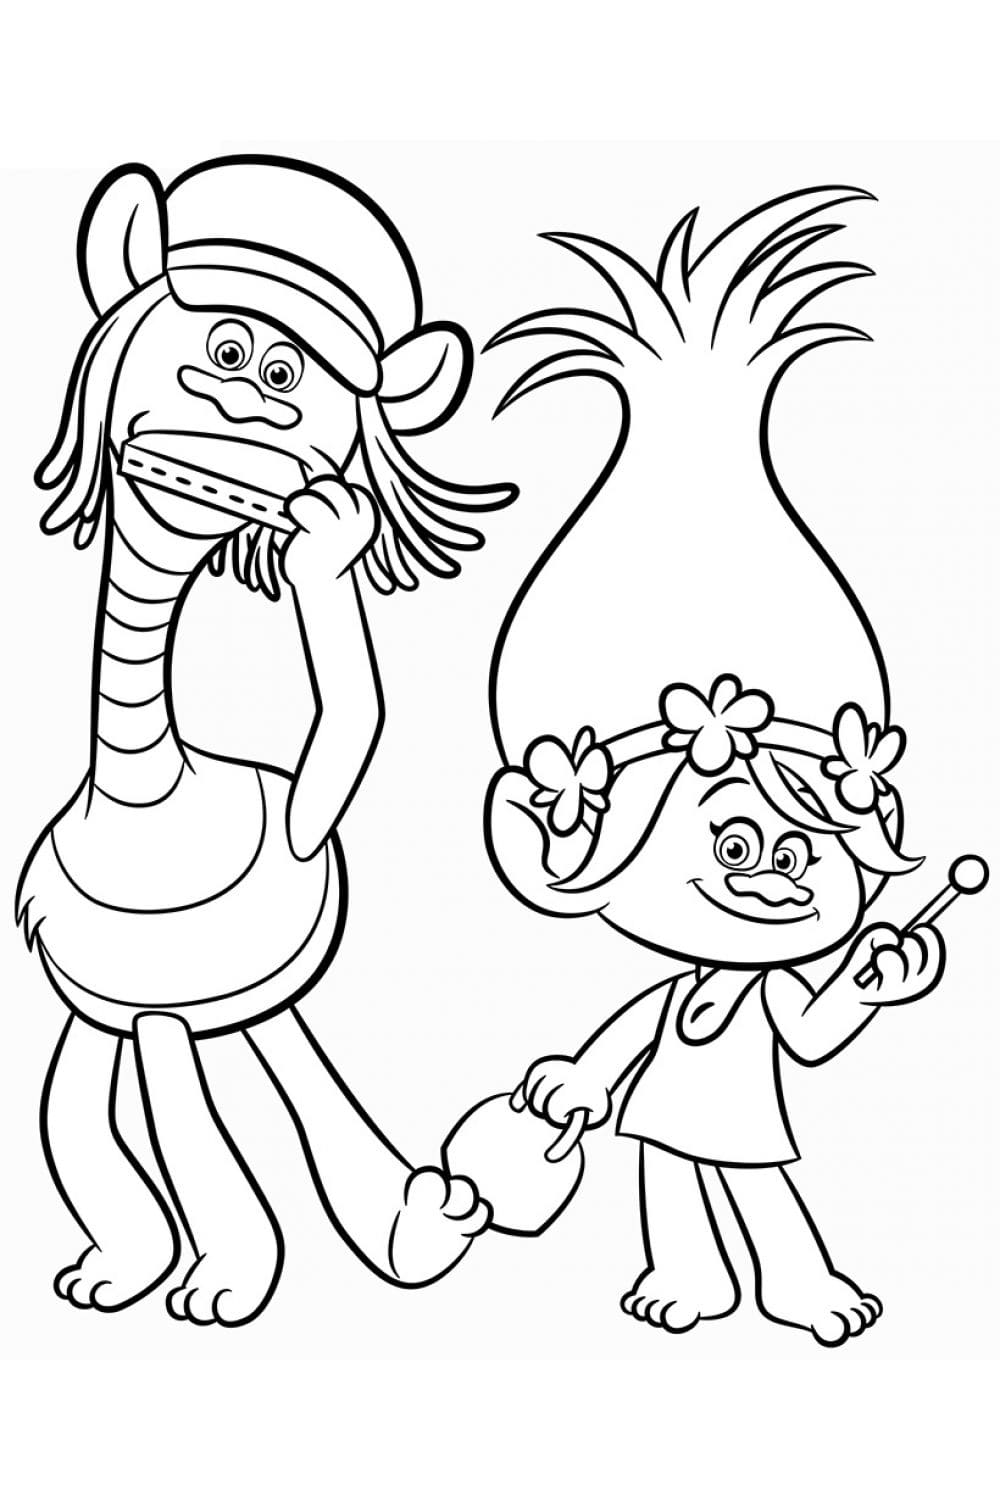 Cooper et Princesse Poppy coloring page